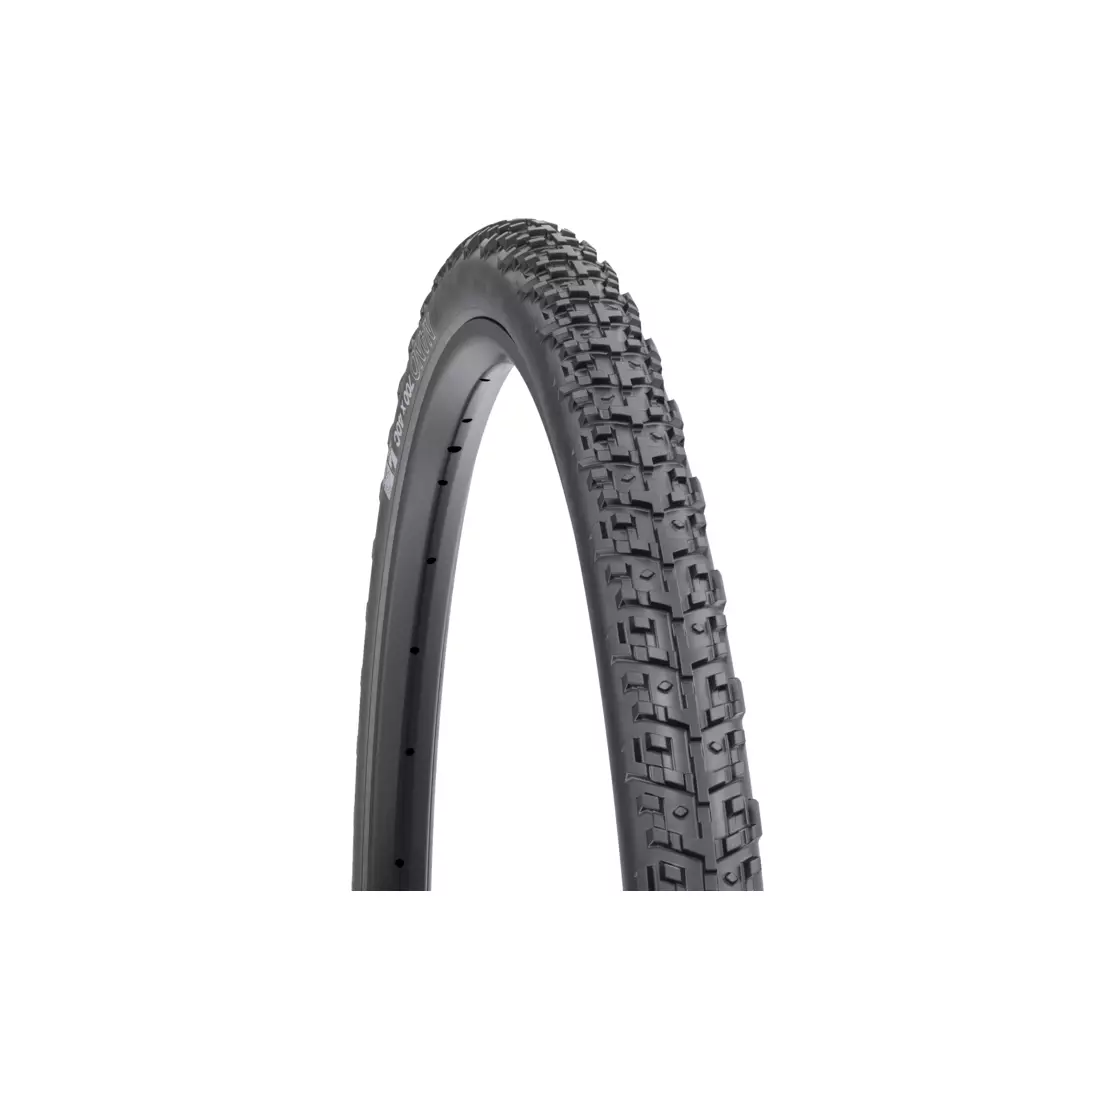 WTB Bike tire NANO 700x40c COMP W010-0523